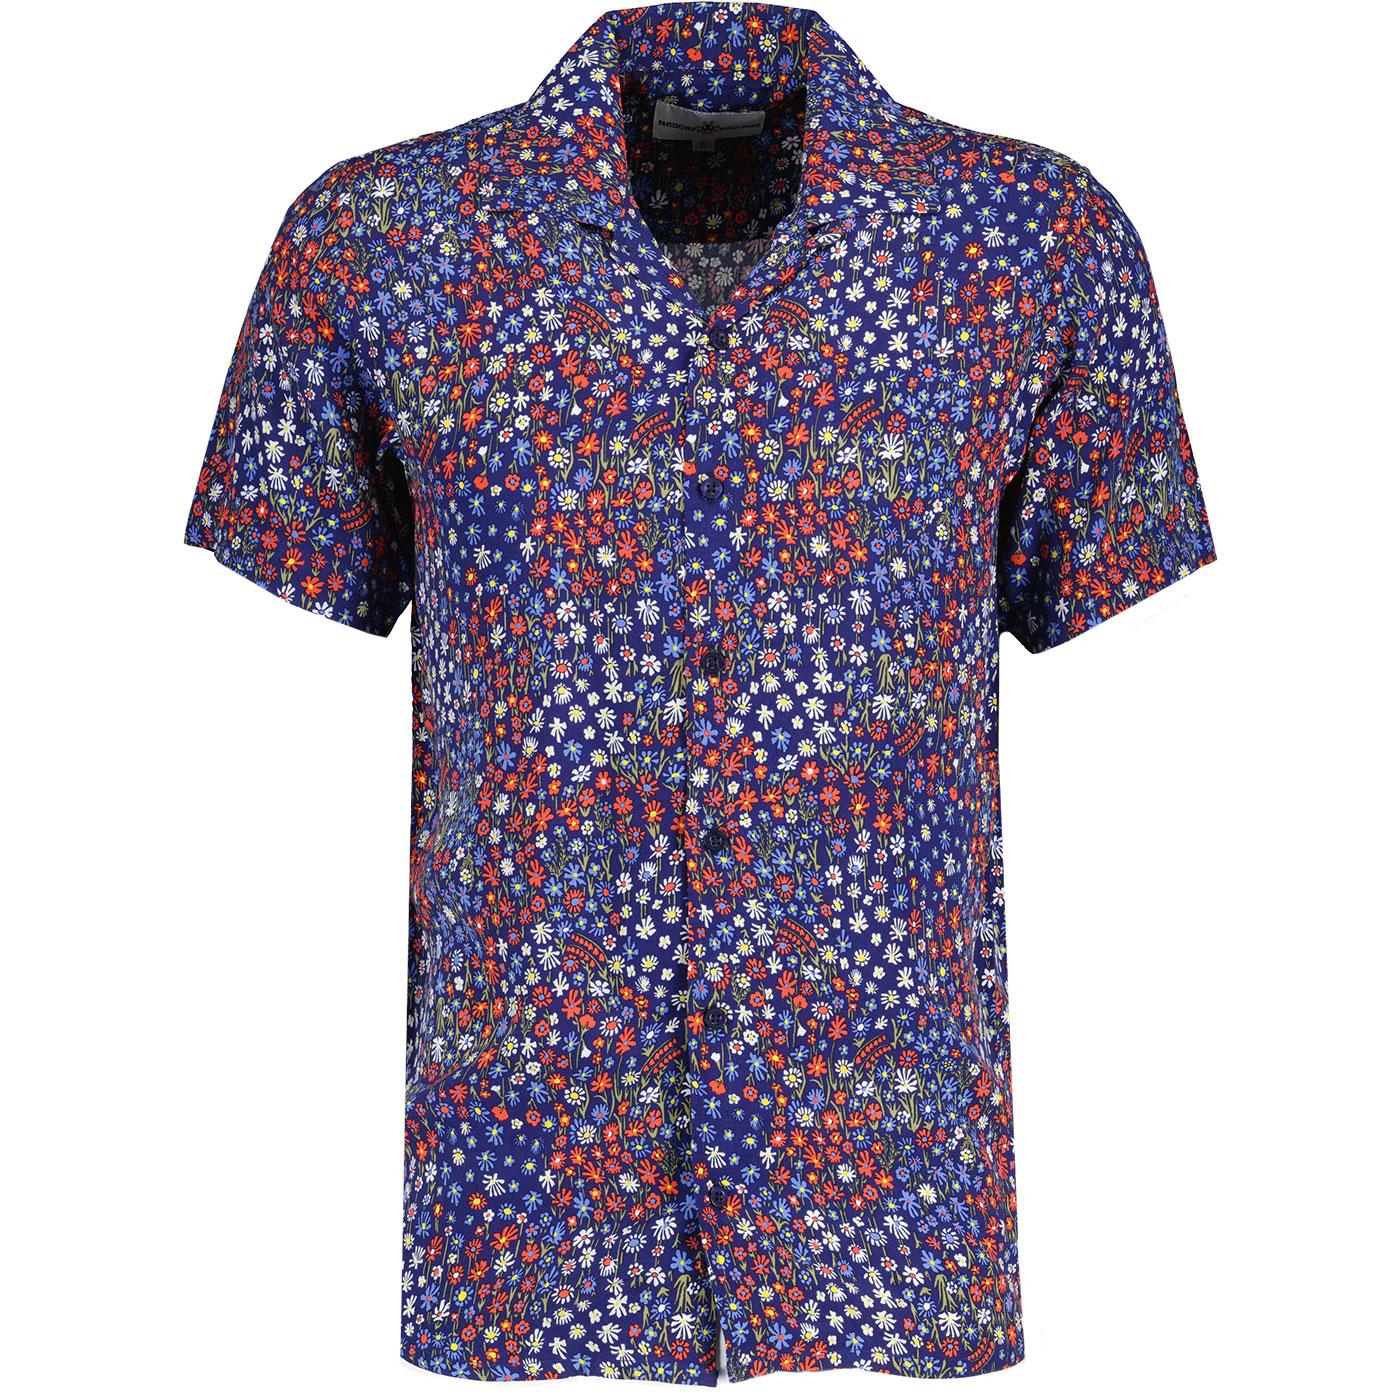 Men's Short Sleeve Mod Shirts, Retro Shirts | Madcap England